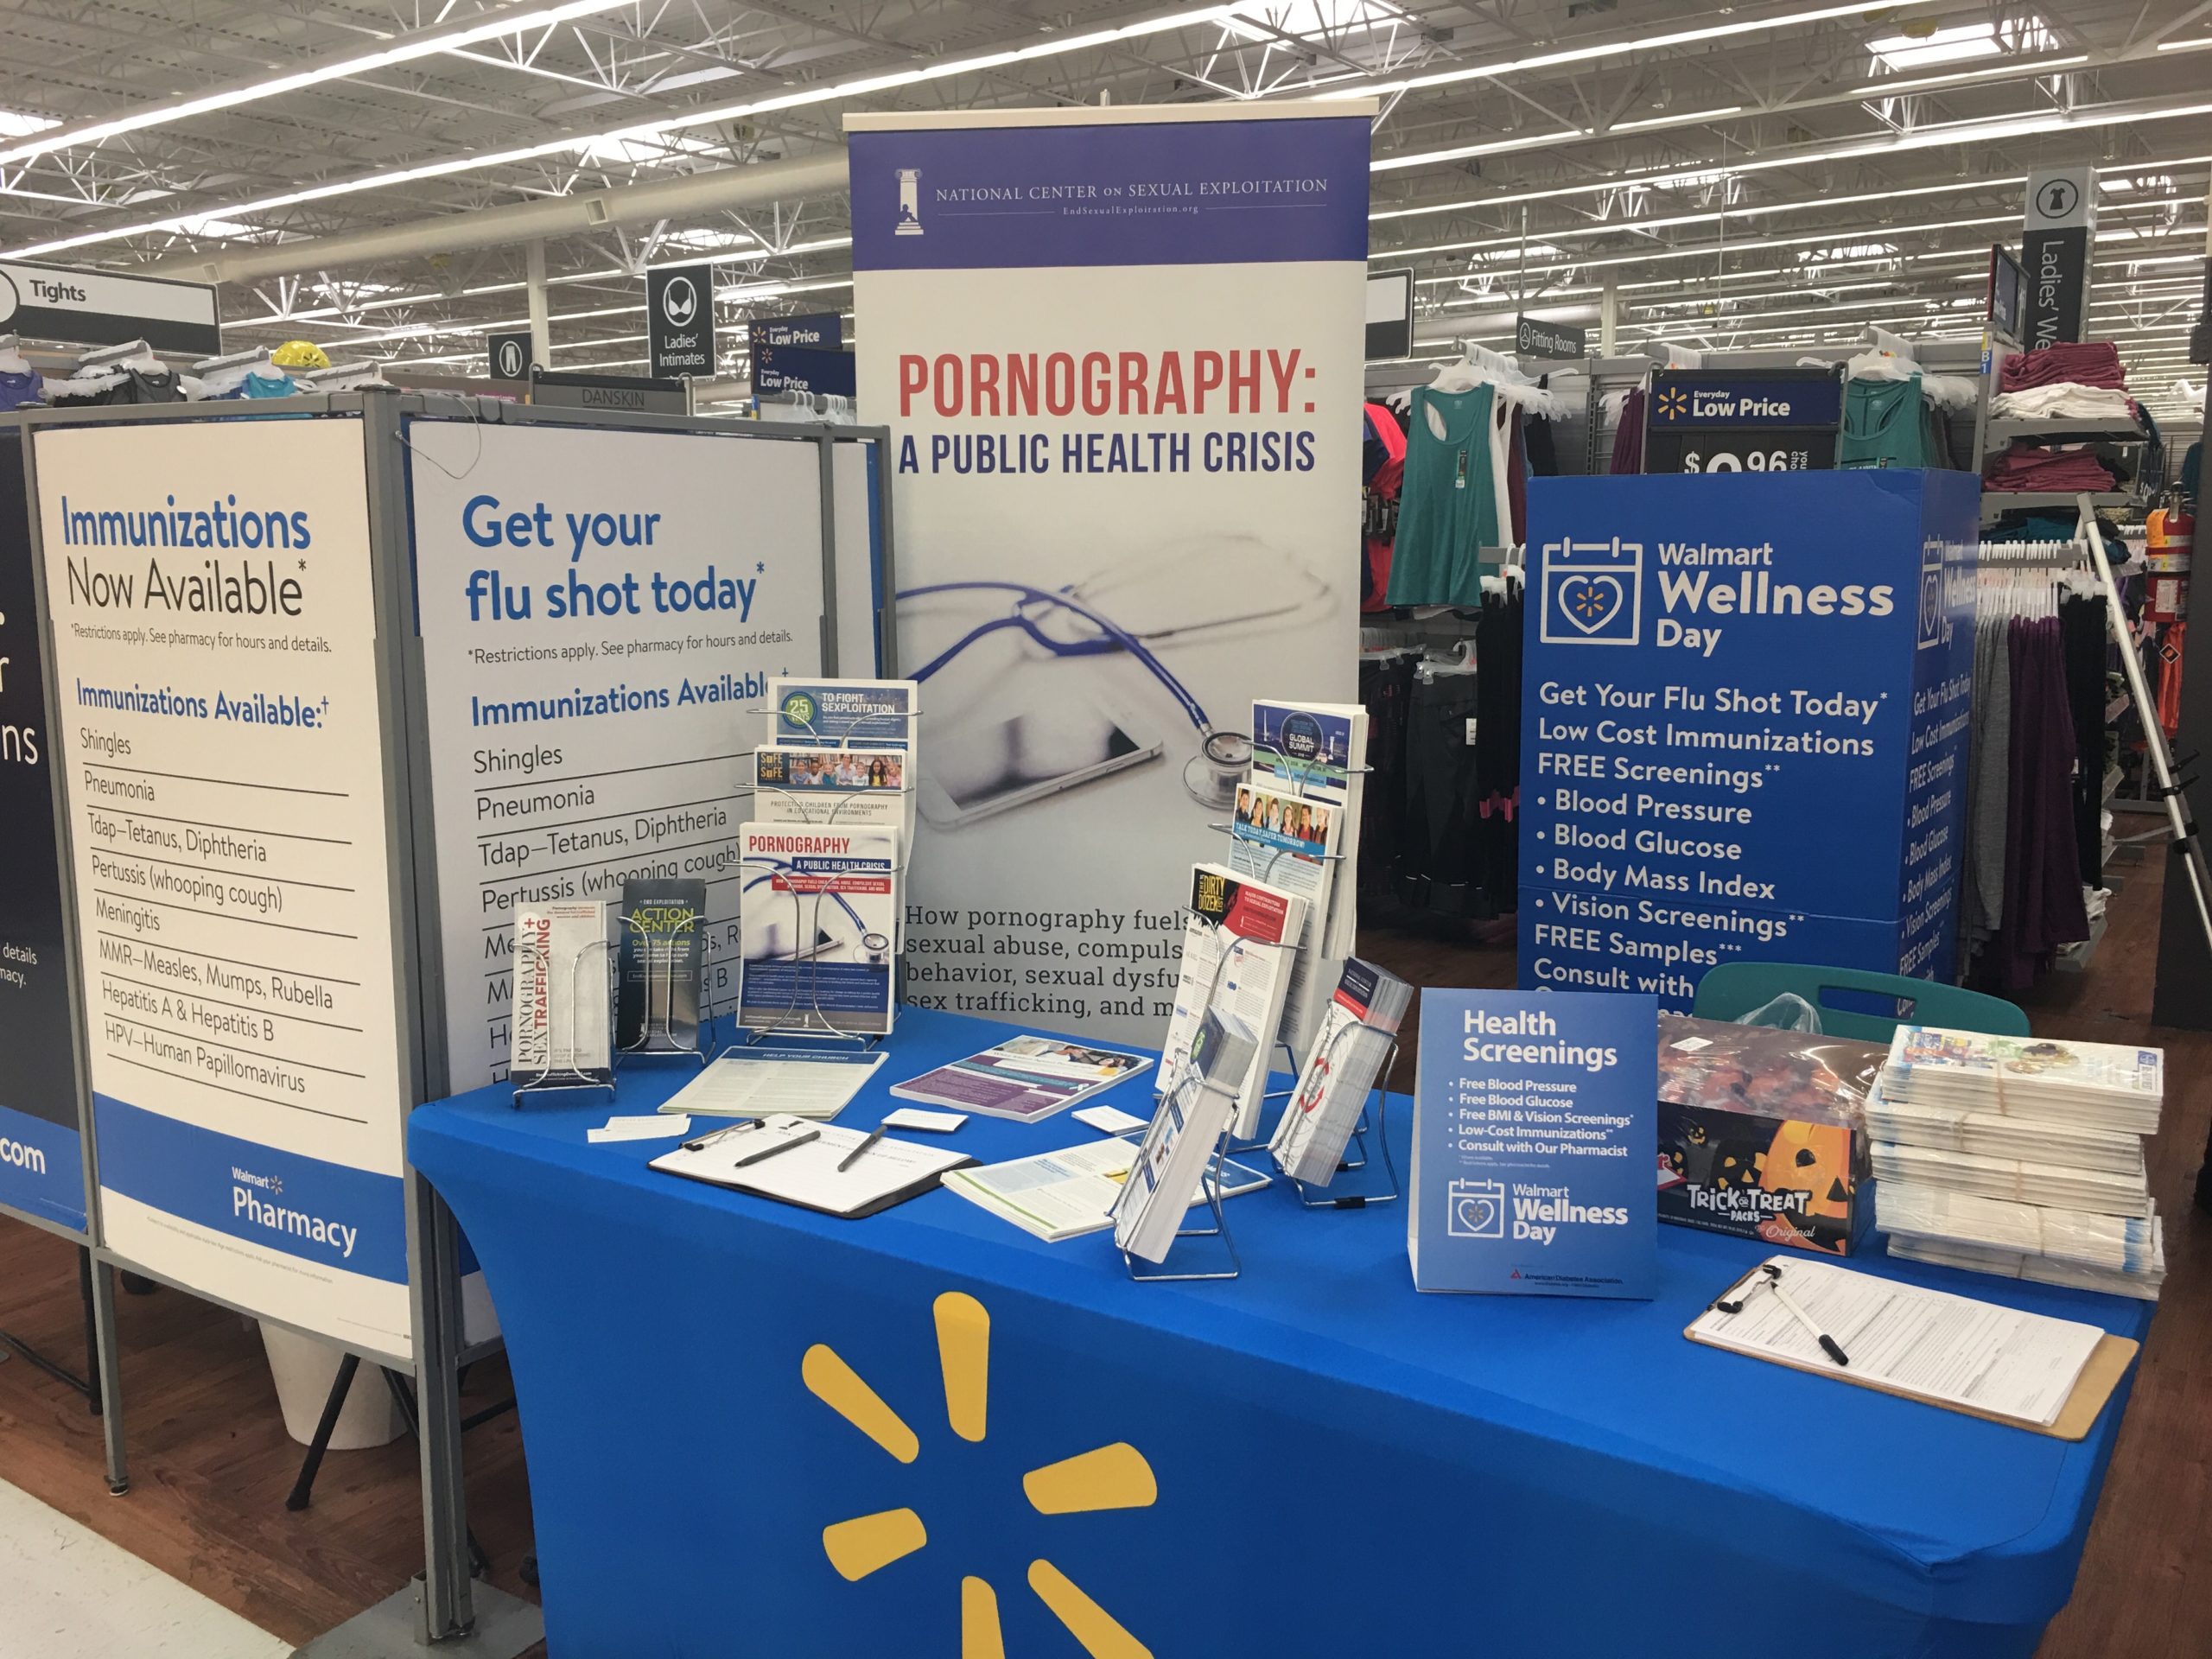 Walmart Public Health Event and PornographyWalmart Public Health Event